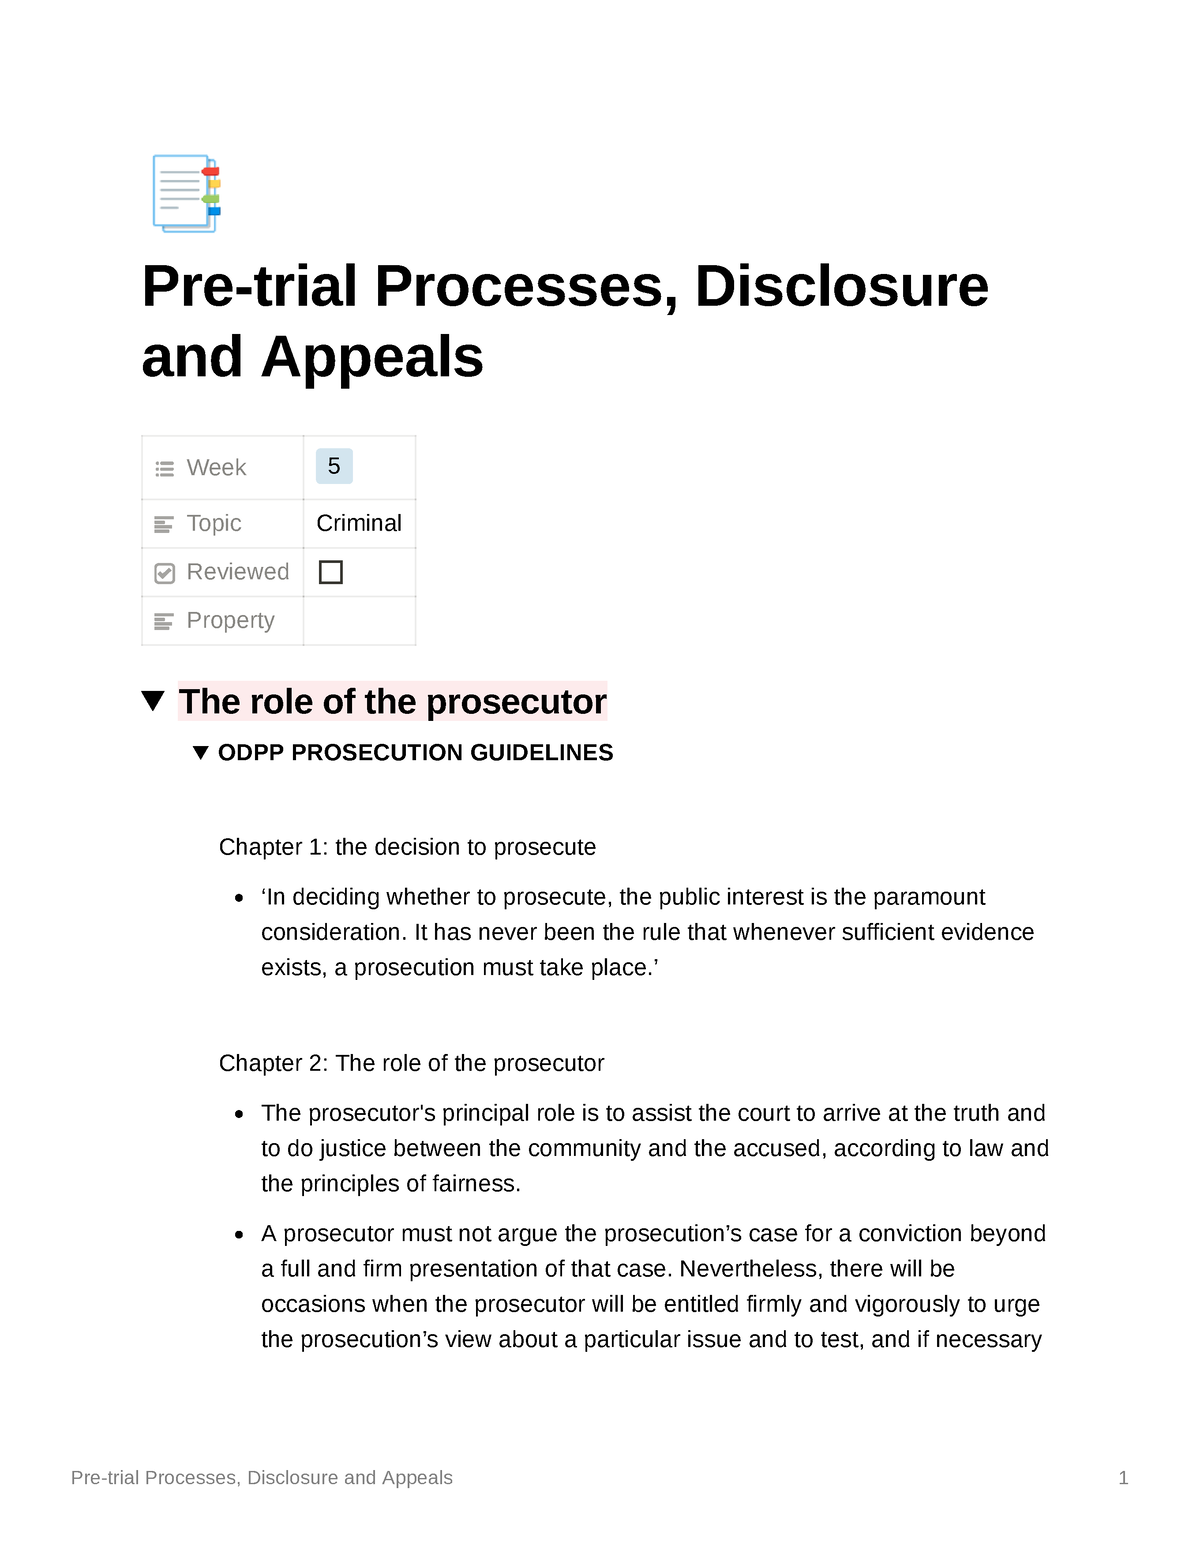 Pre-trial Processes Disclosure and Appeals - ¿ Pre-trial Processes ...